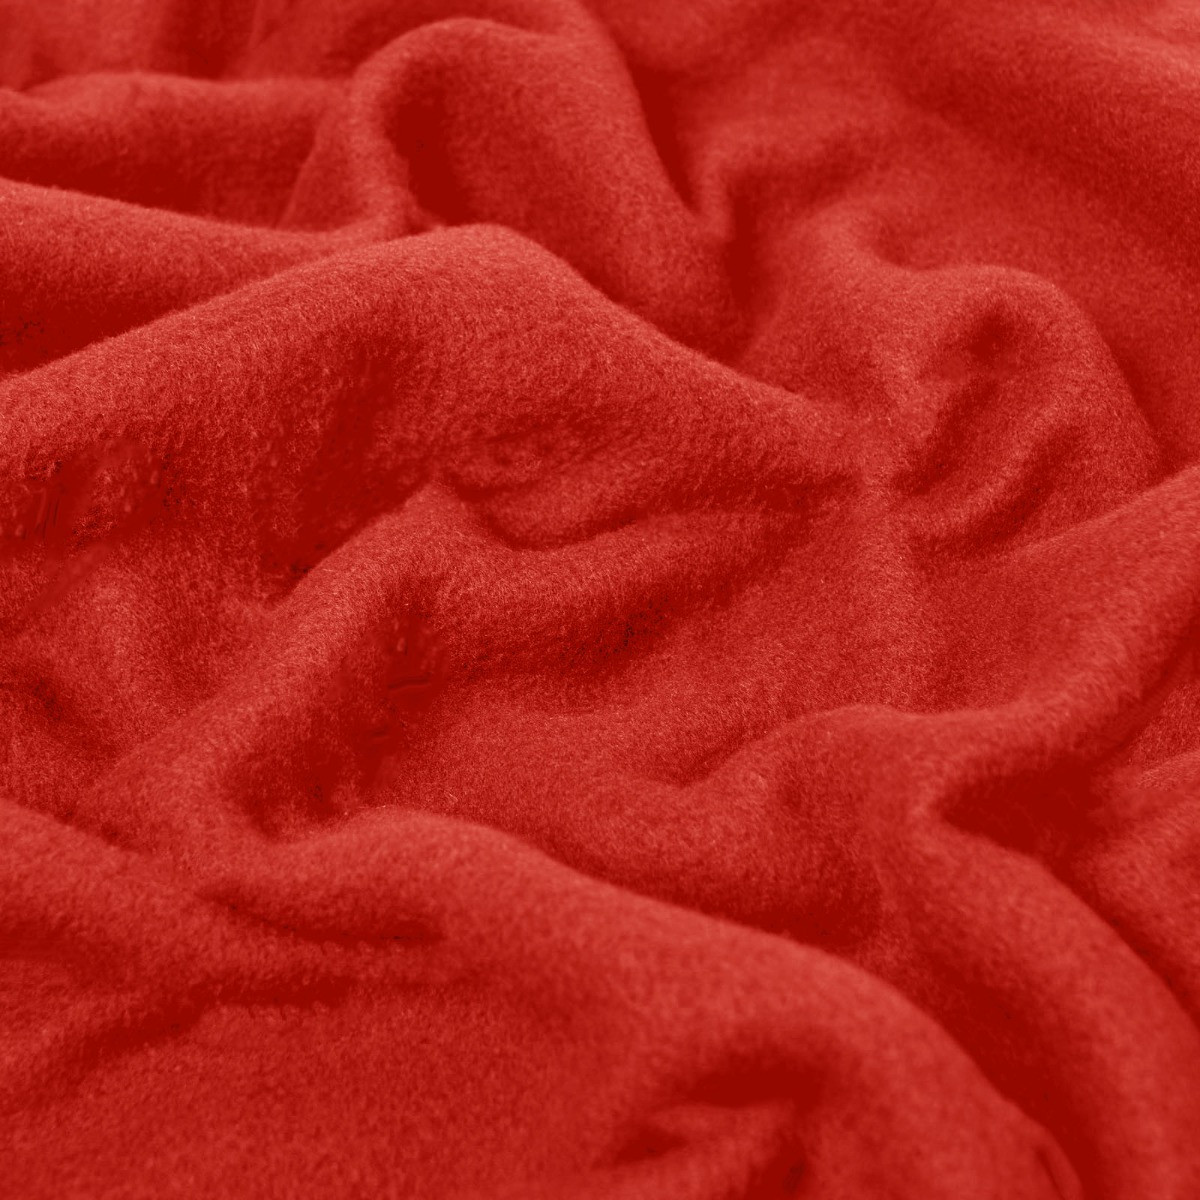 Dreamscene Plain Fleece Throw, Red - 200 x 240 cm>